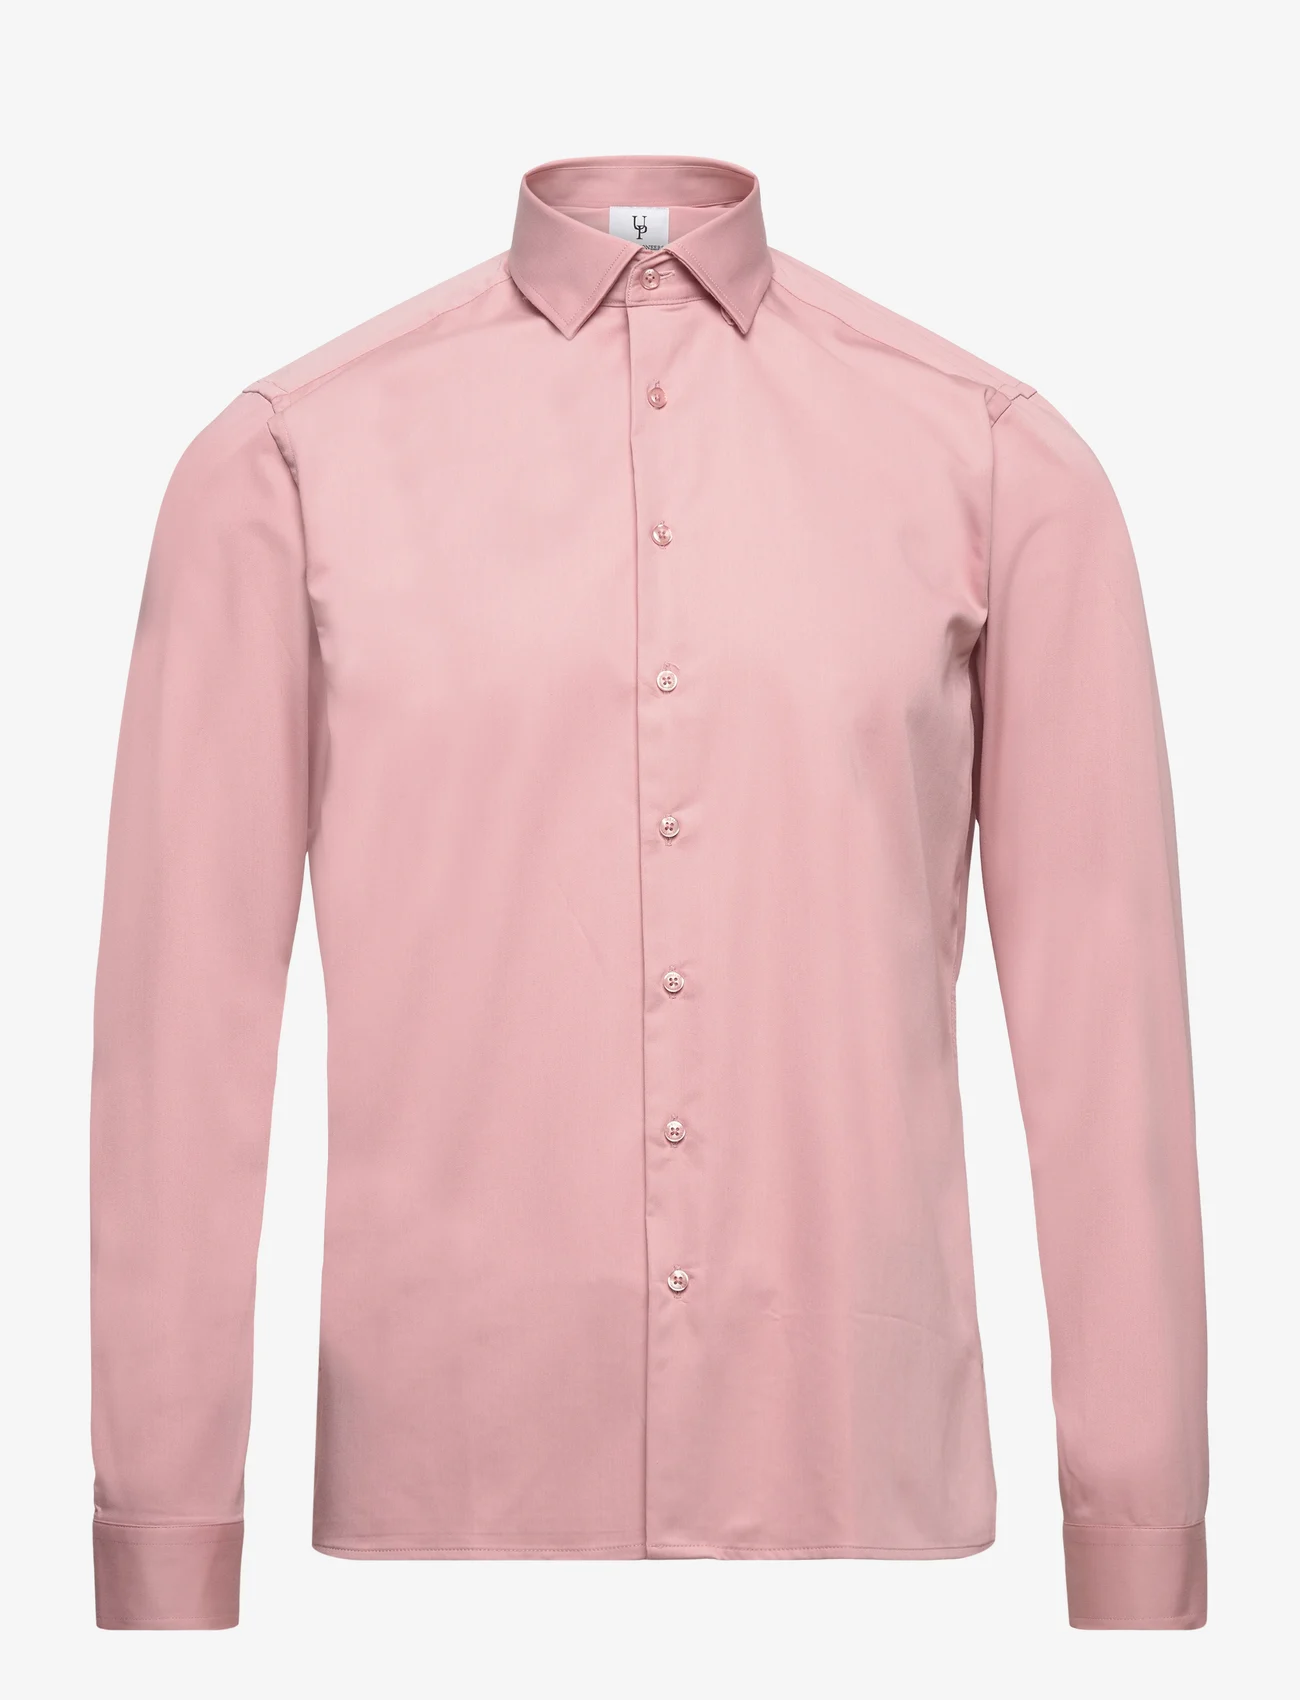 Urban Pioneers - Buffon Shirt - basic overhemden - wood rose - 0